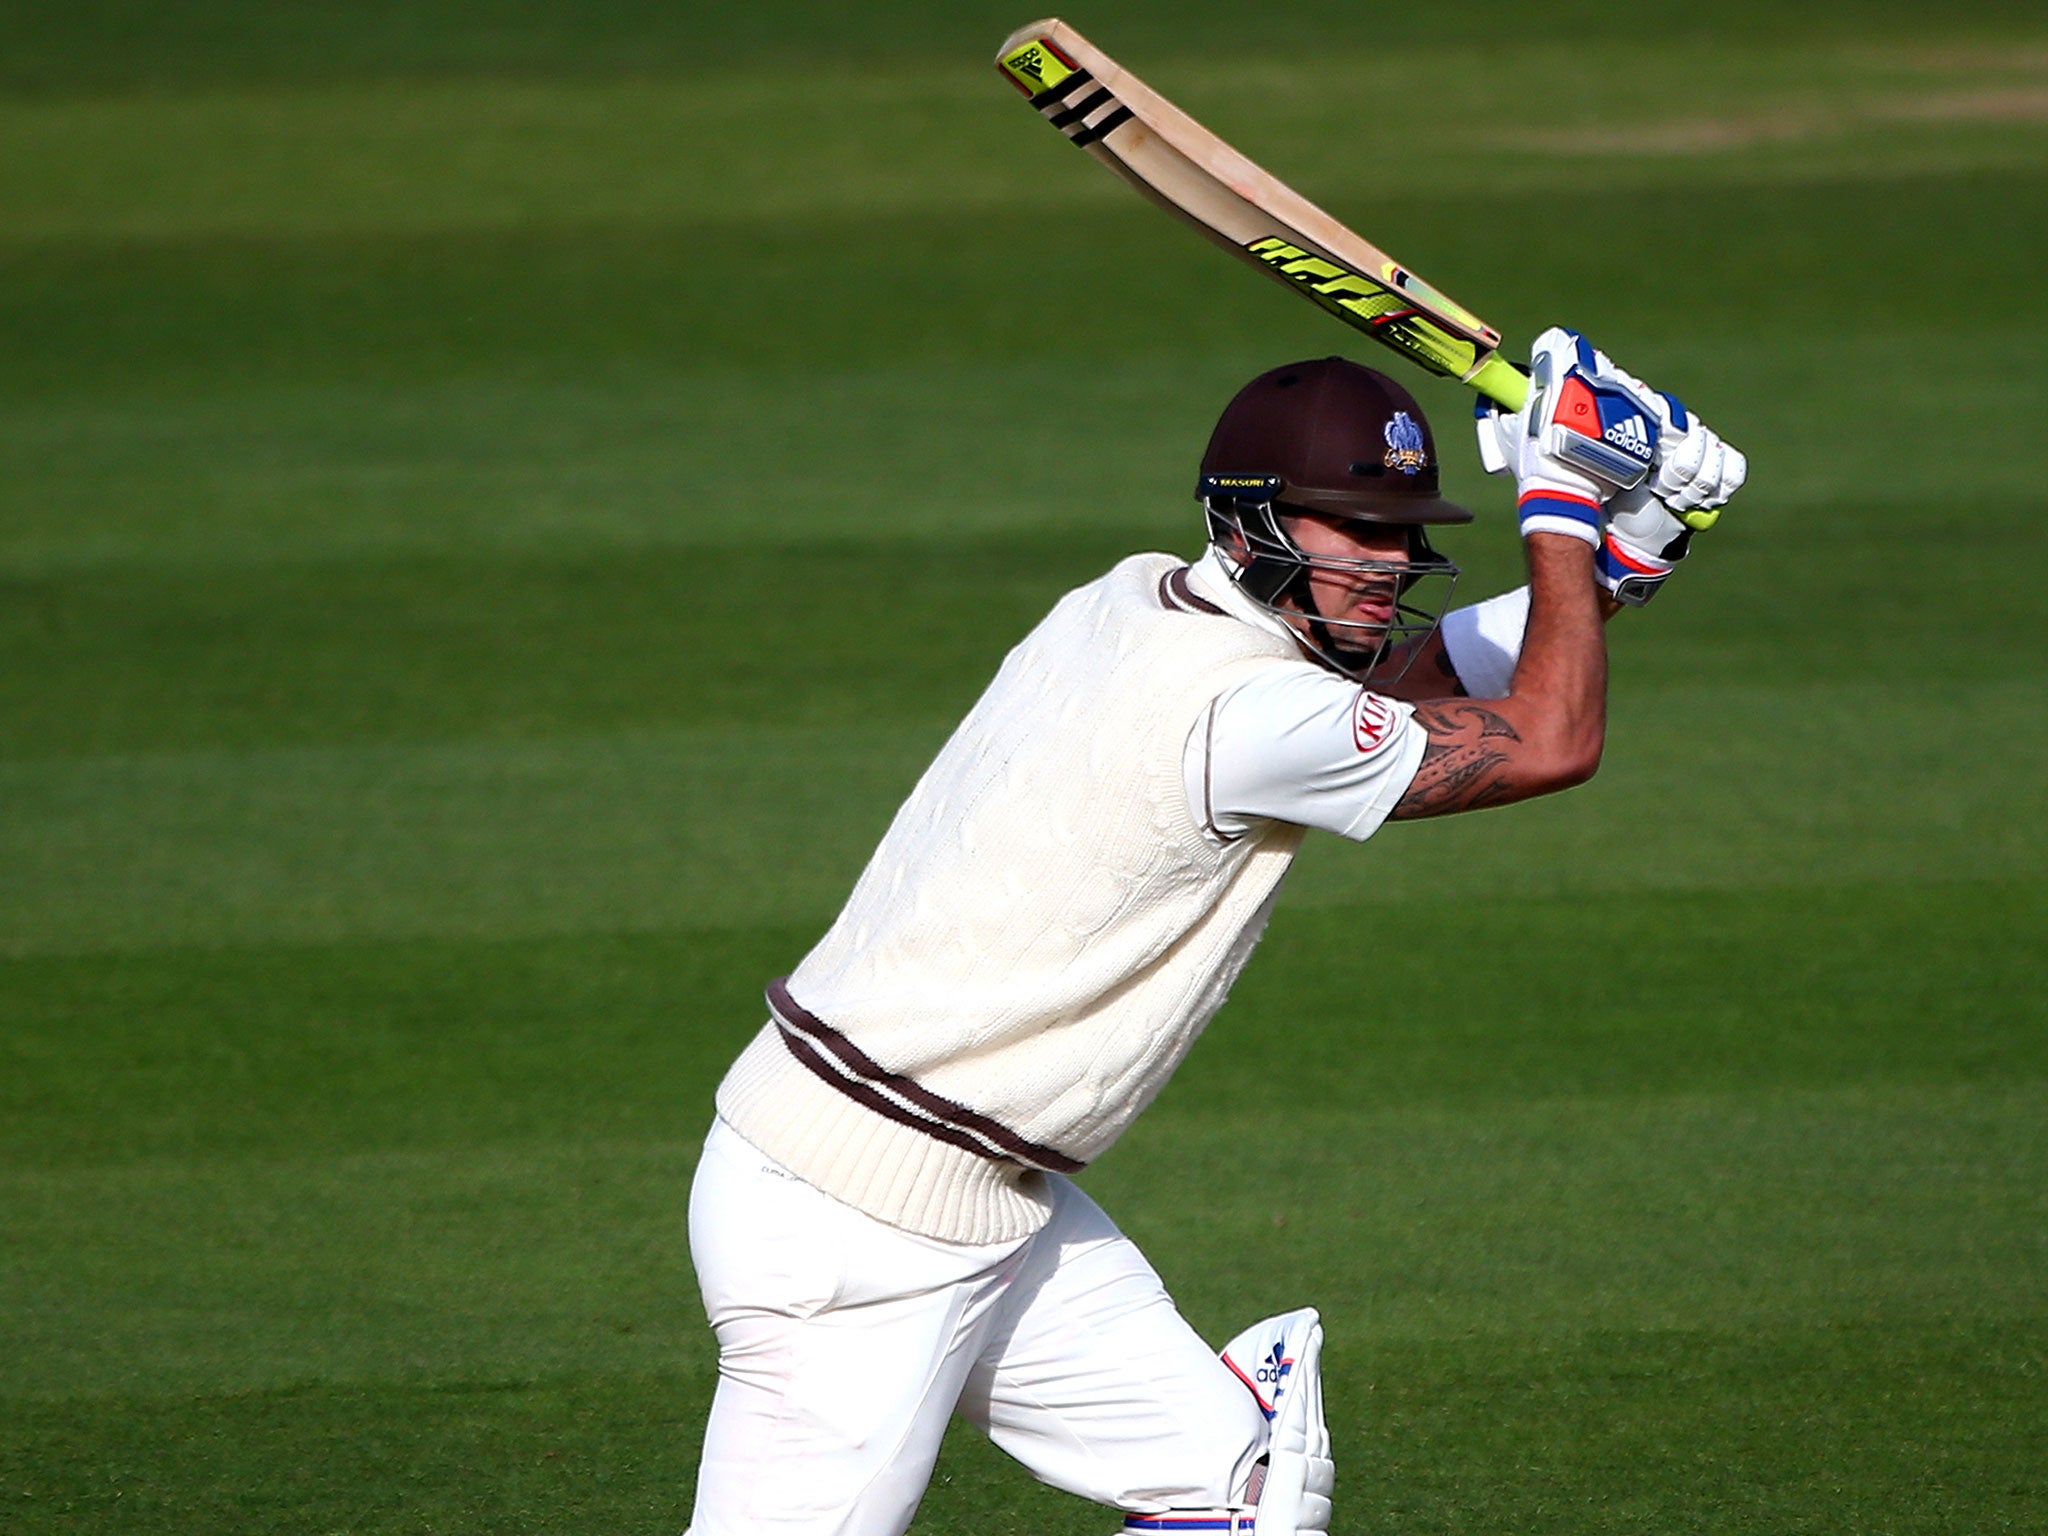 Kevin Pietersen in action for Surrey